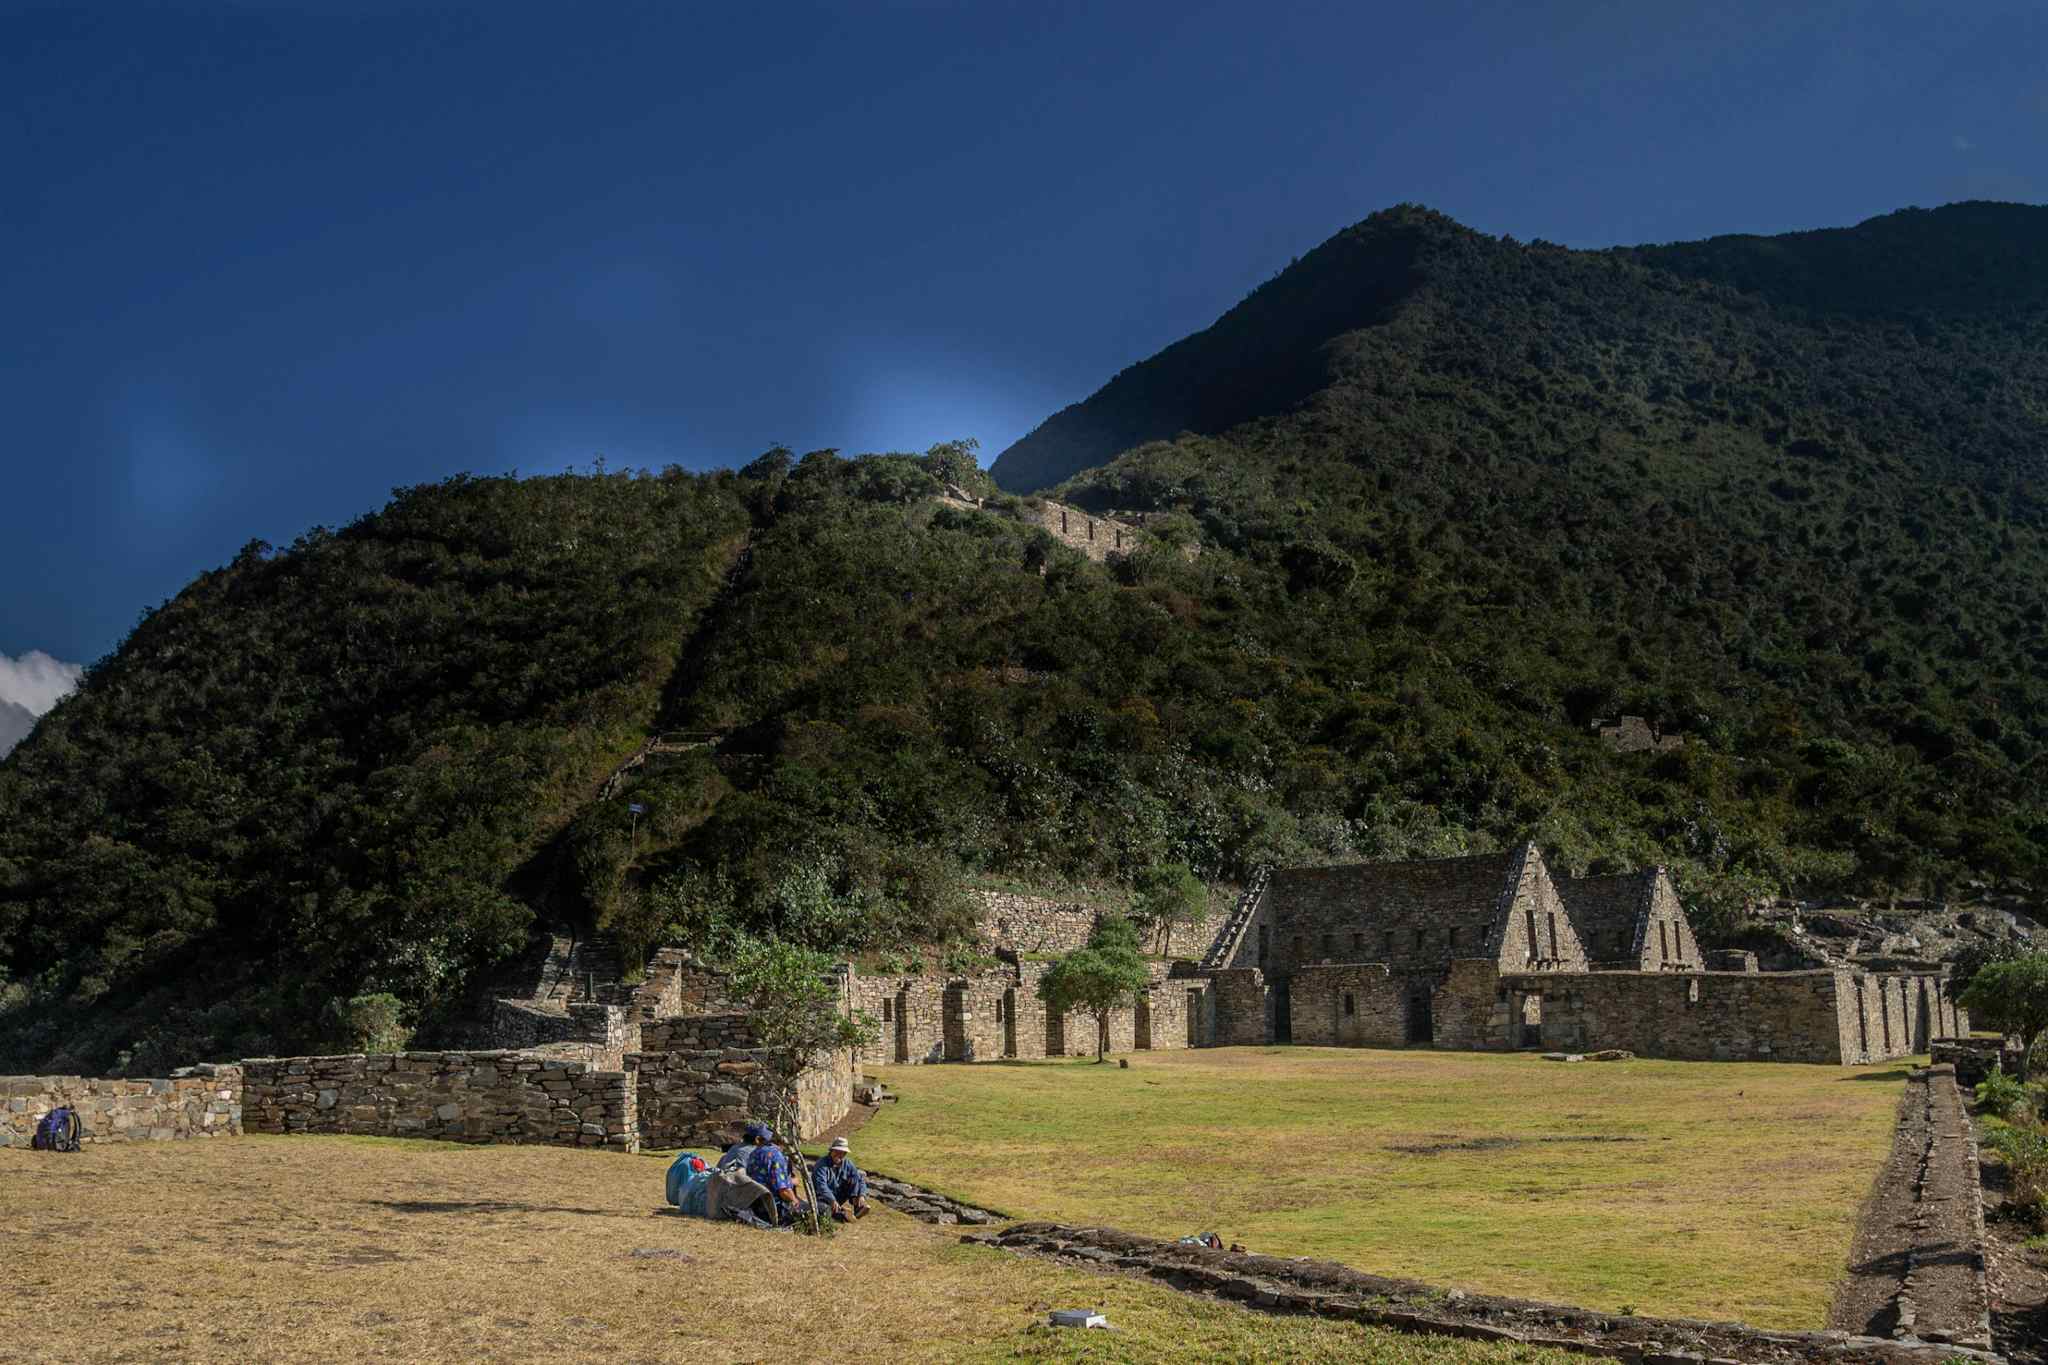 The lost city of Choquequirao. Photo: Host/Action Treks Peru